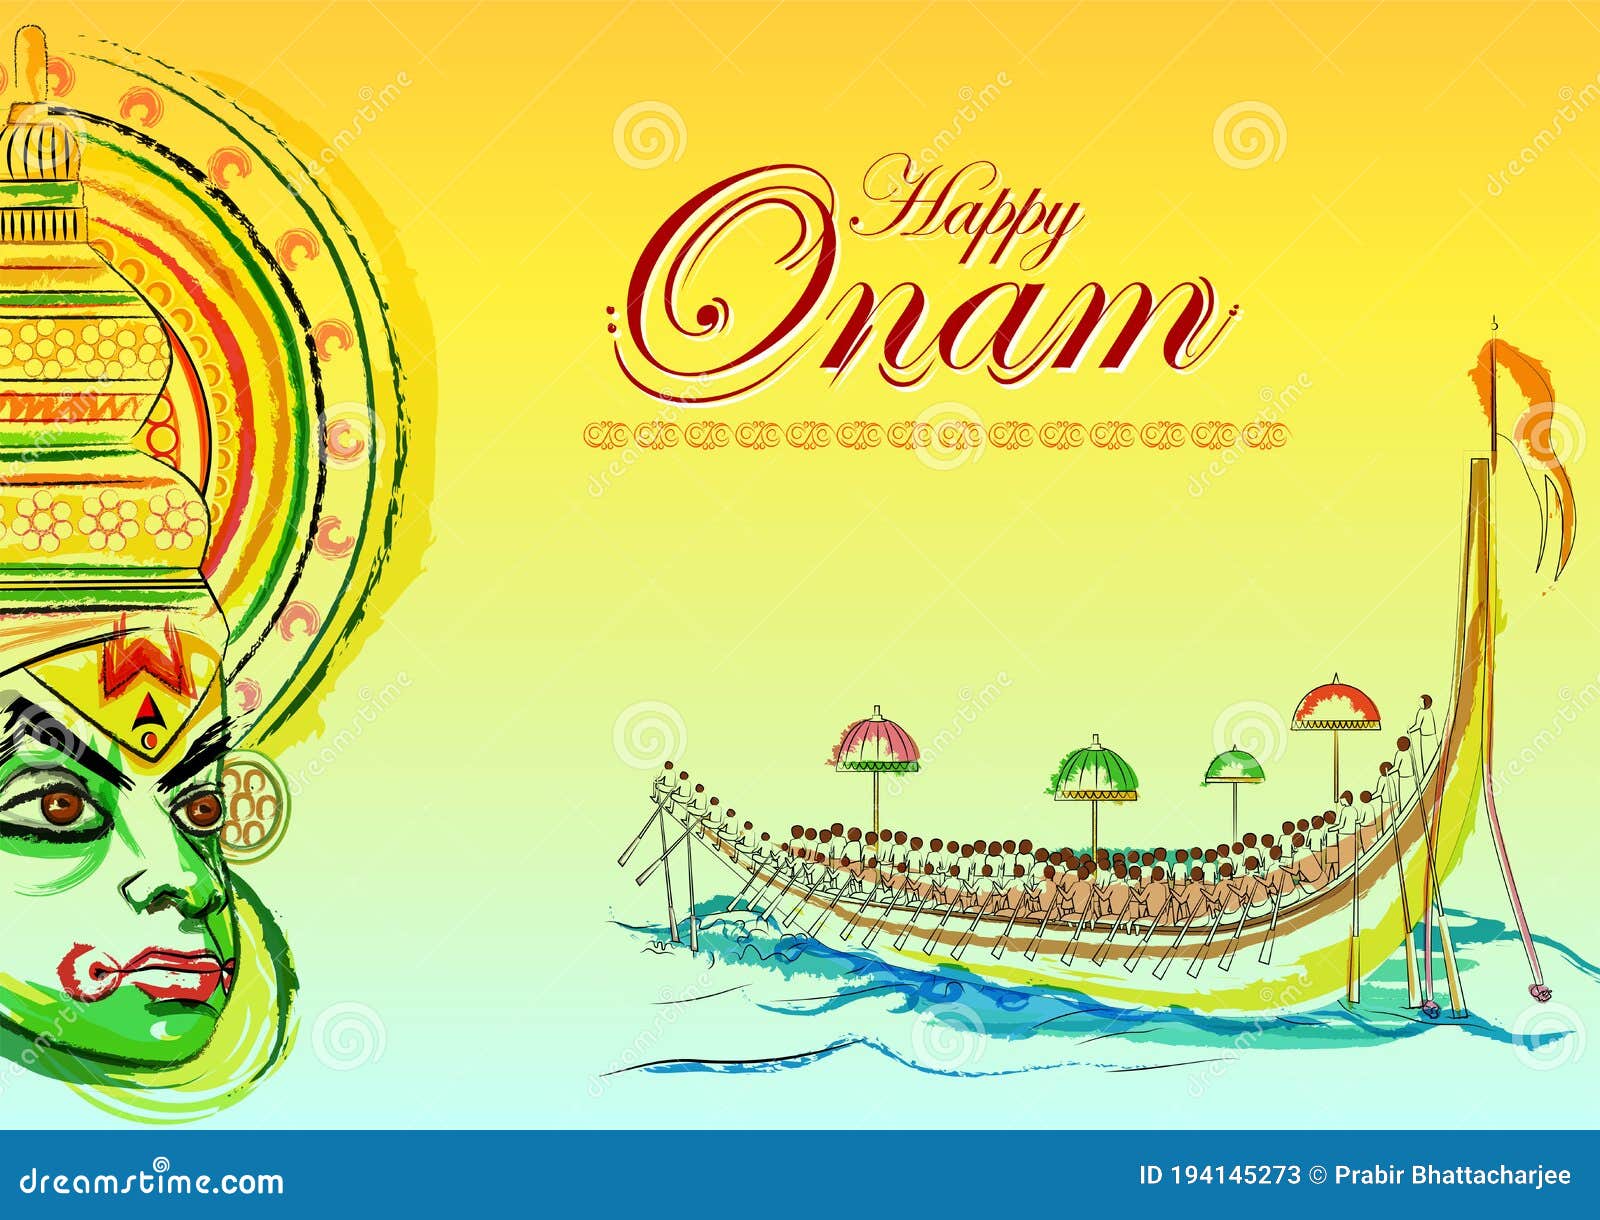 Vector Design Happy Onam Background Indian Stock Vector (Royalty Free)  479124646 Shutterstock 